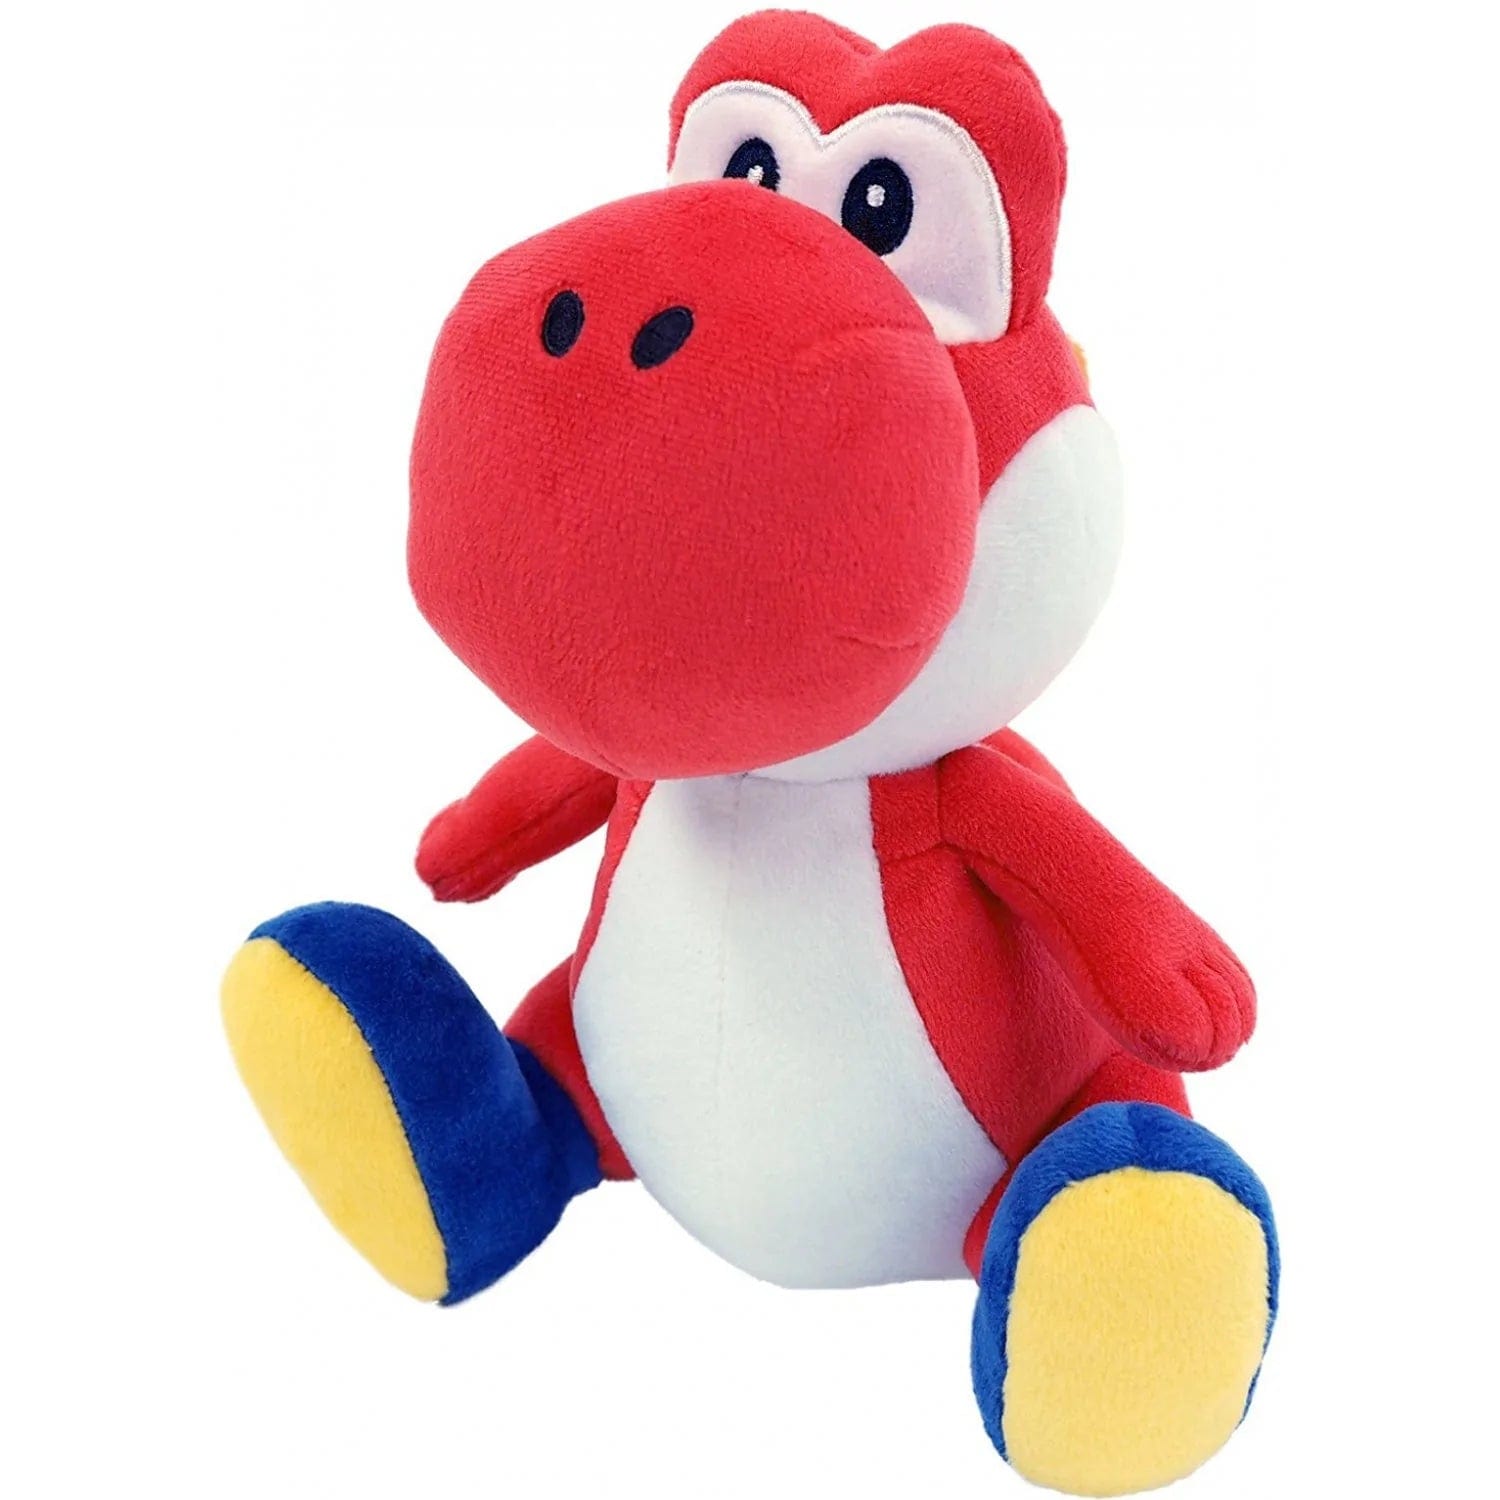 Little Buddy Super Mario All Star Yoshi - Red Yoshi Plush 7"